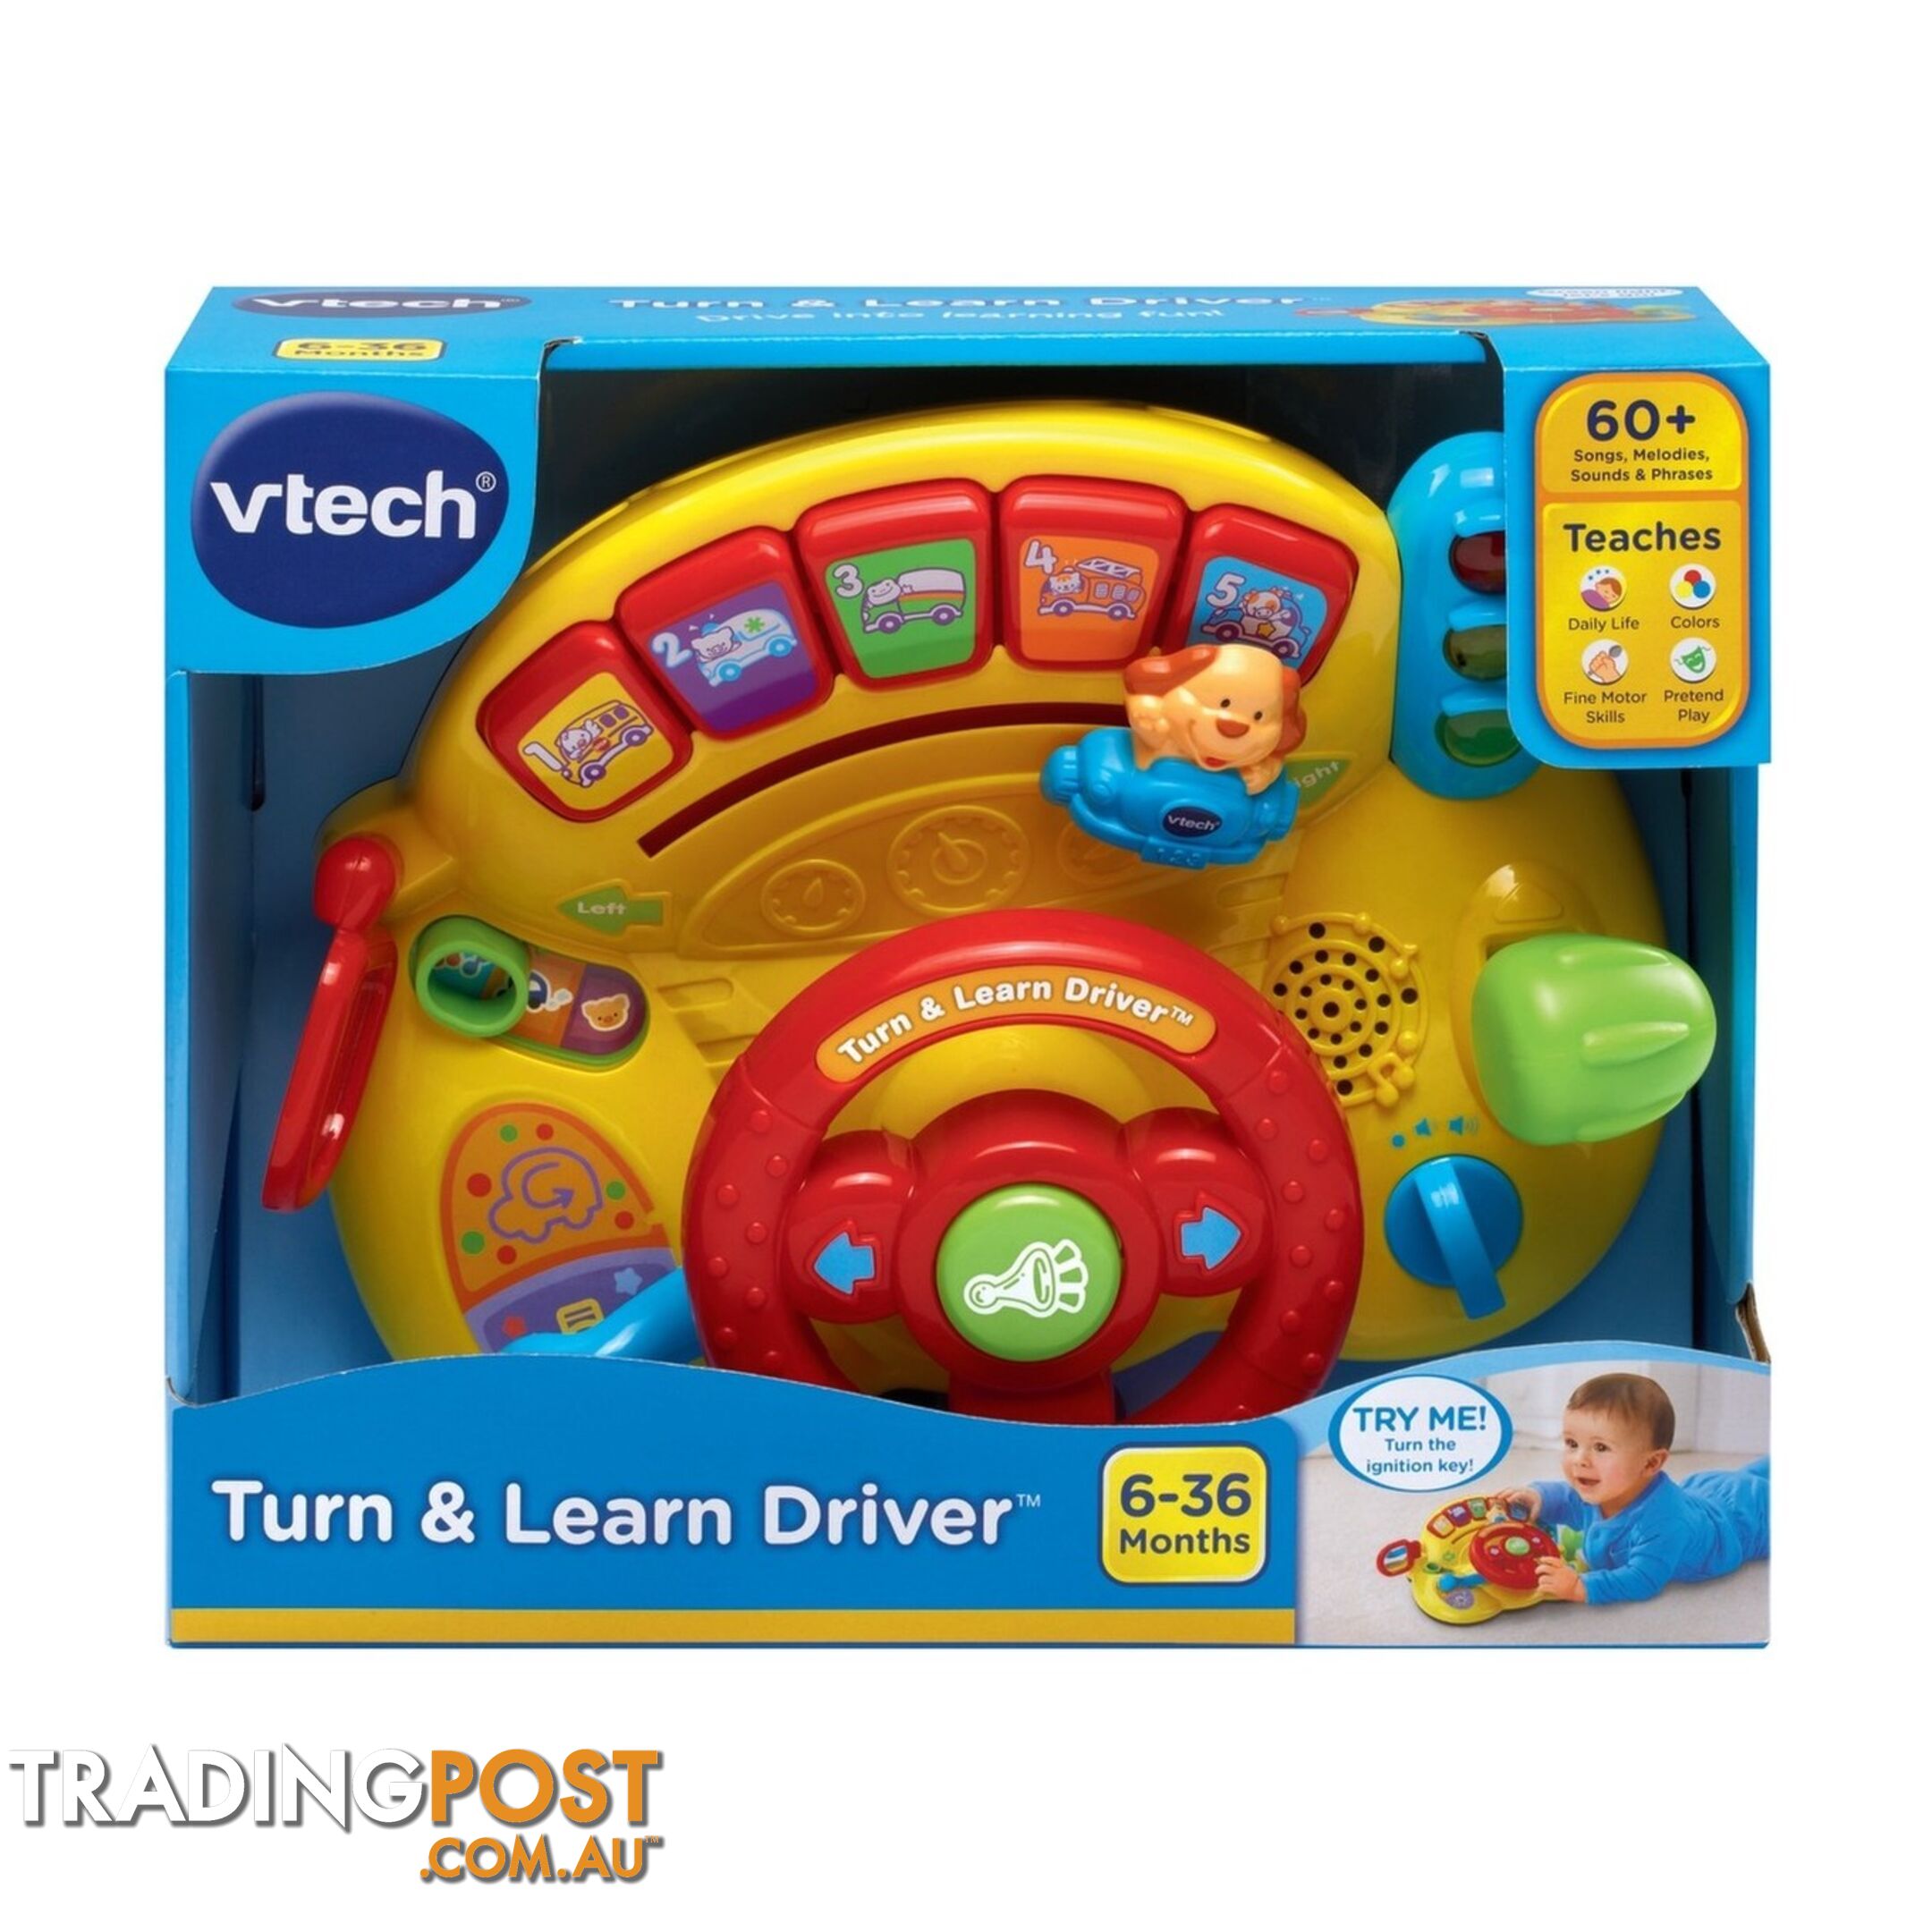 Vtech - Turn & Learn Driver - Tn80166600002 - 3417761666005